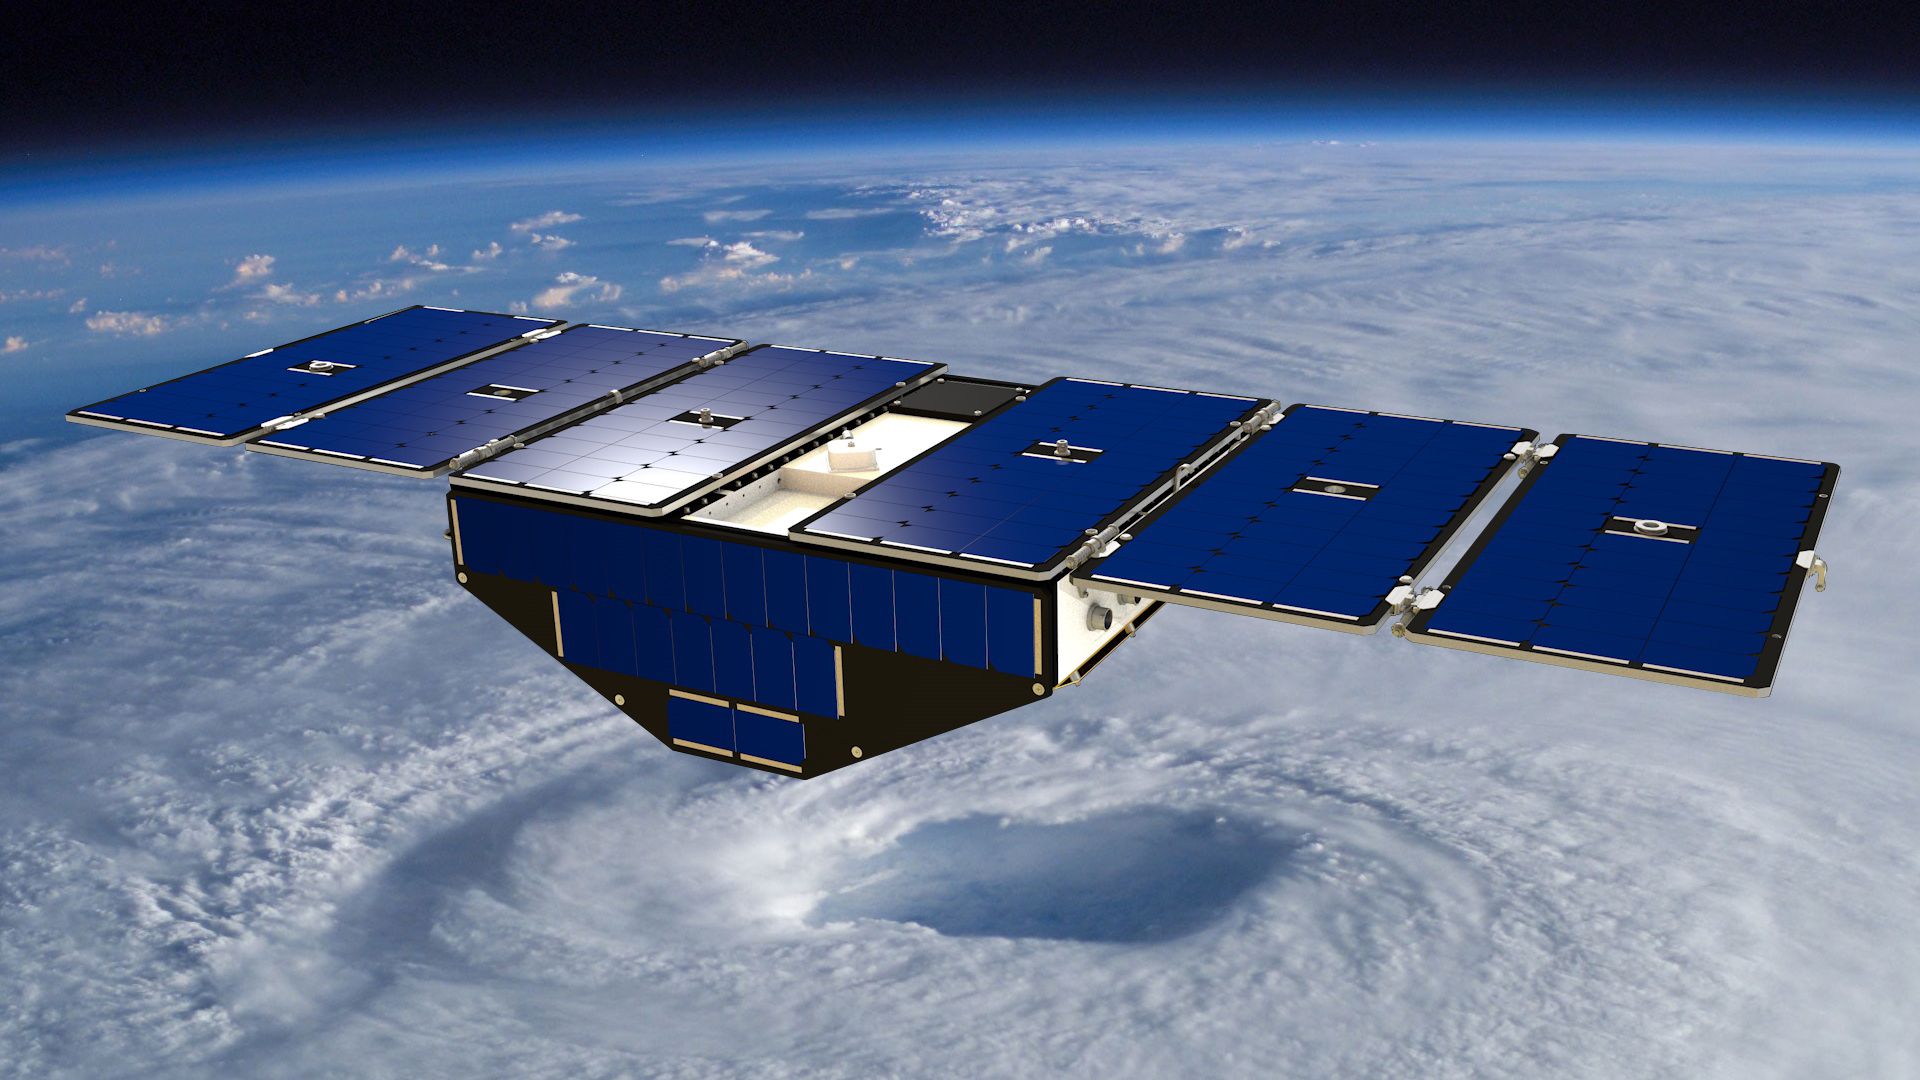 Cyclone Global Navigation Satellite System satellite